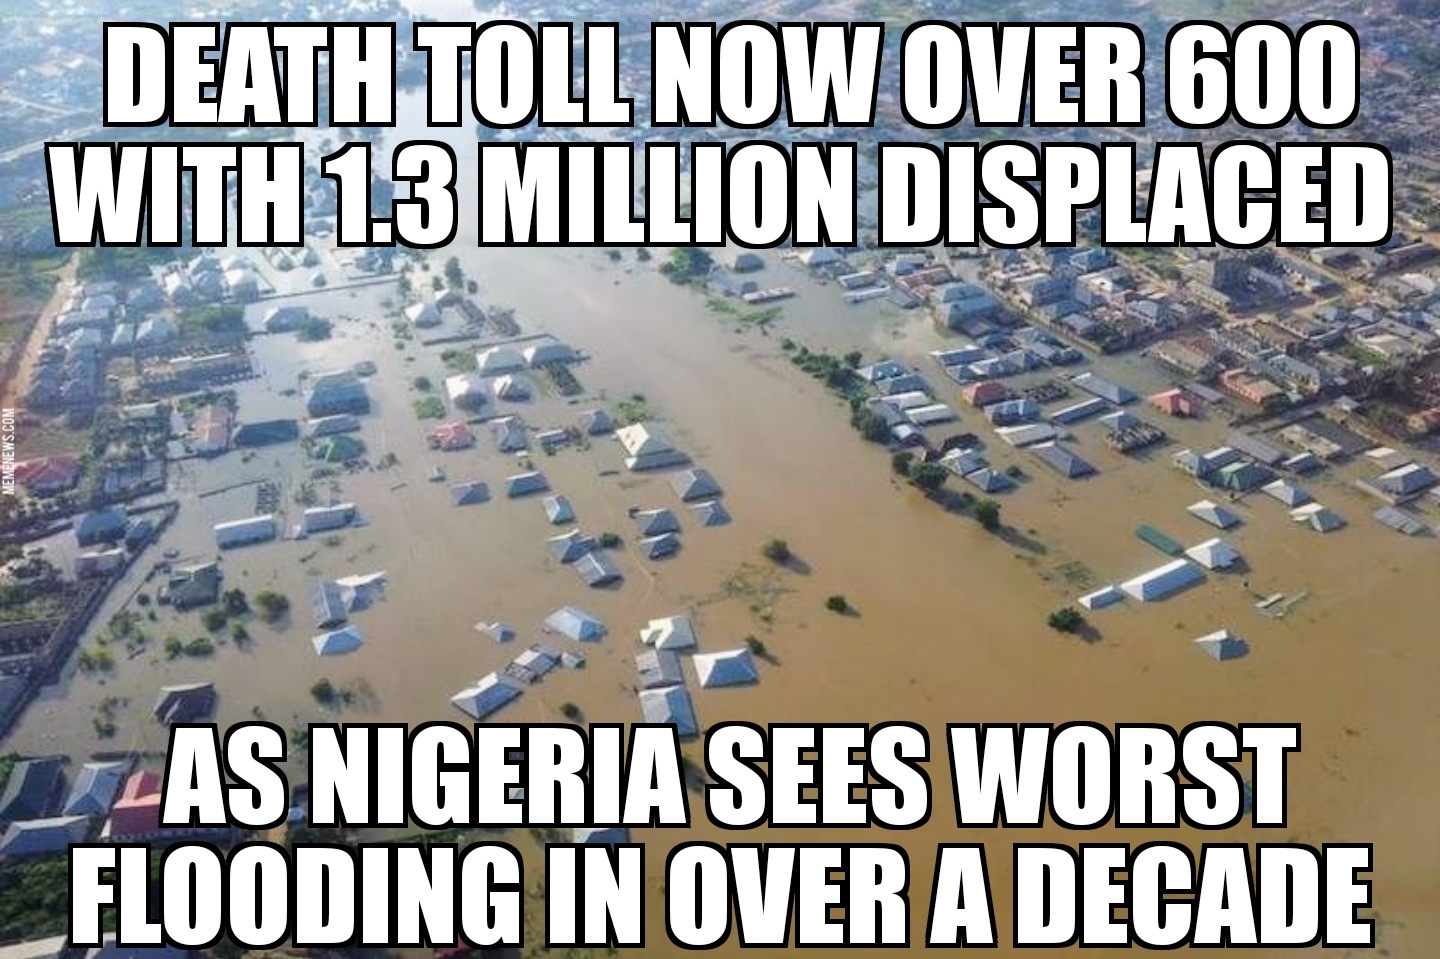 Nigeria floods